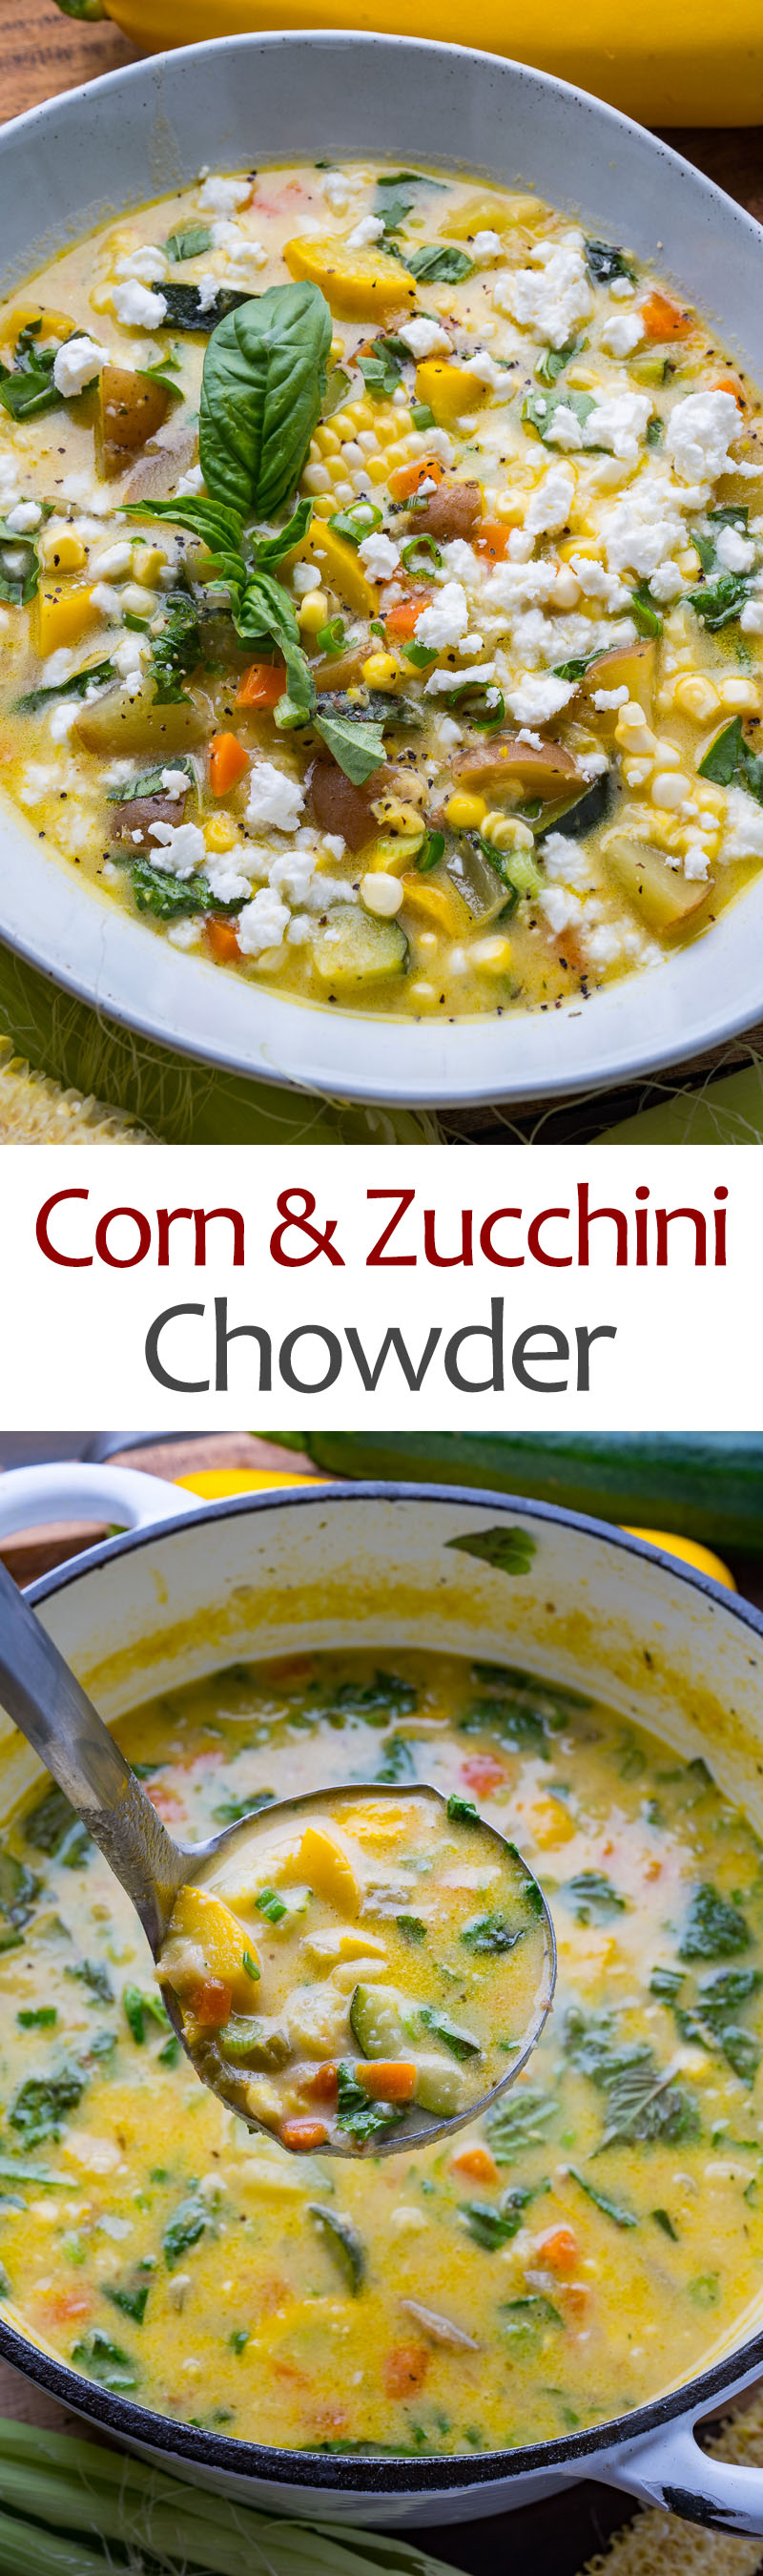 Corn and Zucchini Chowder